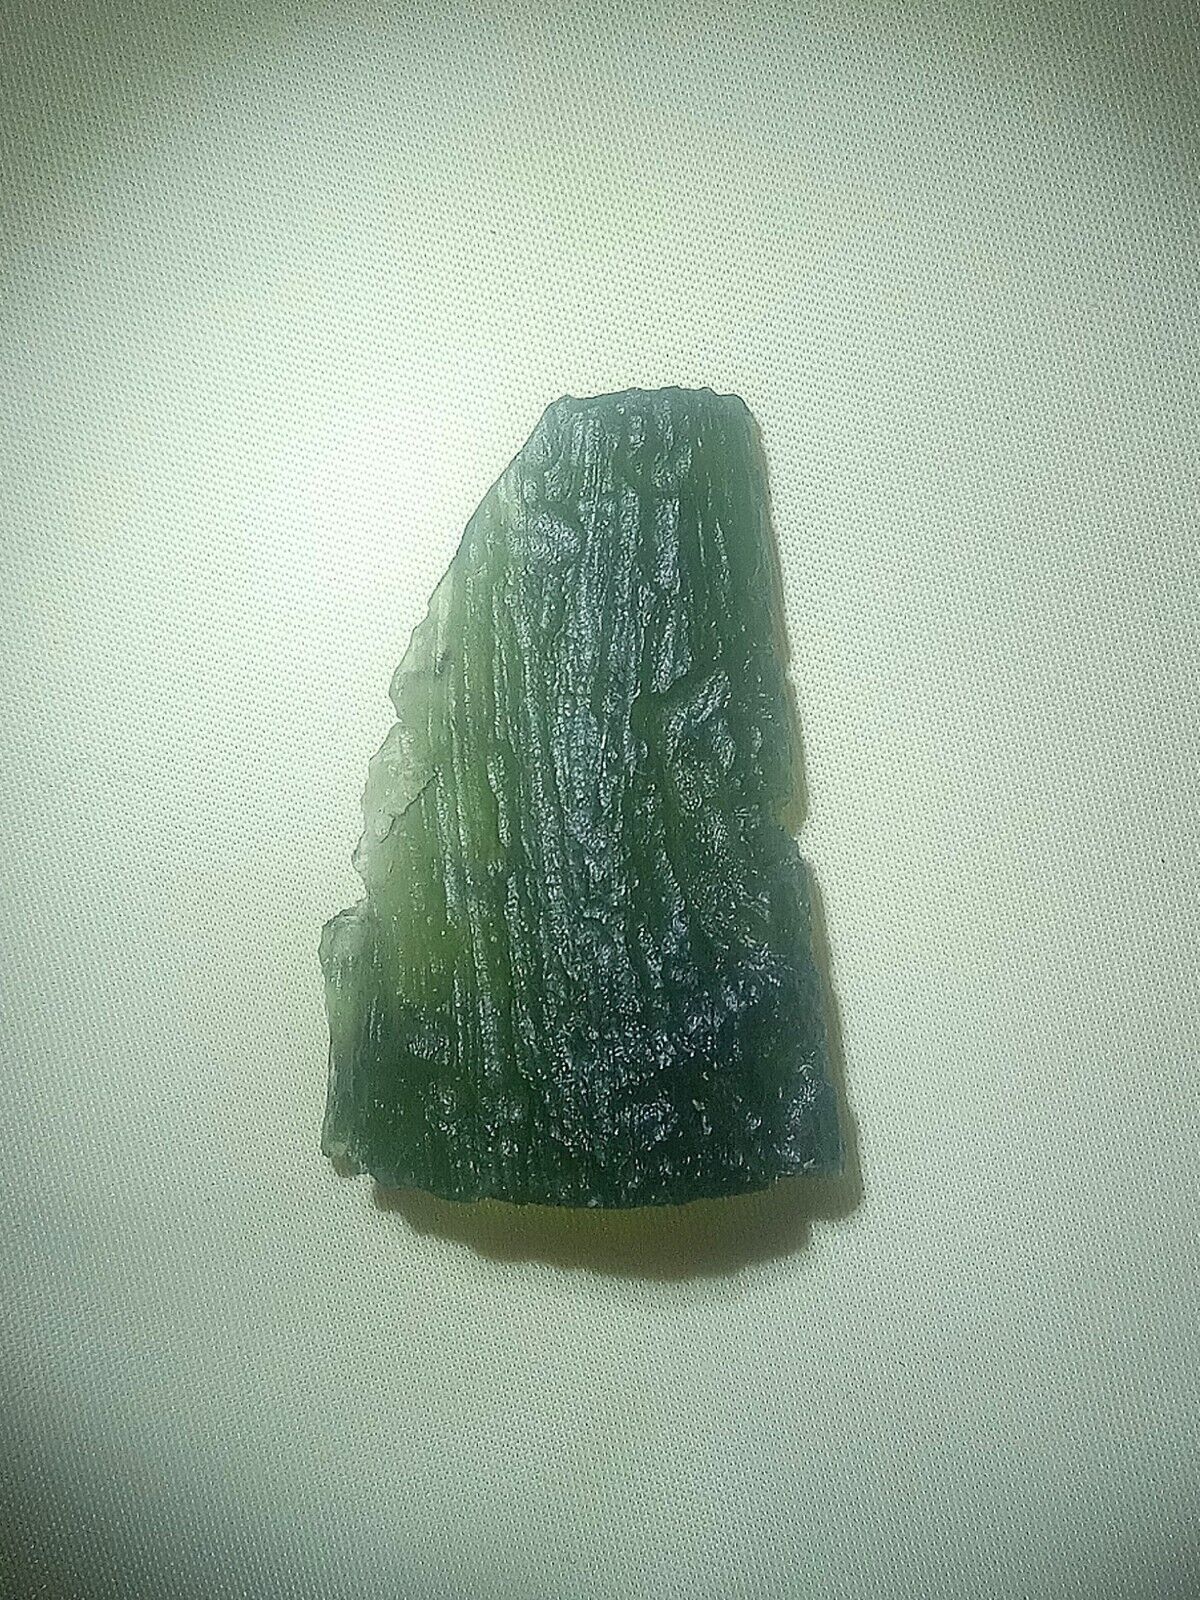 Moldavite- Unique COLLECTION Grade - 9.16G - AAA+